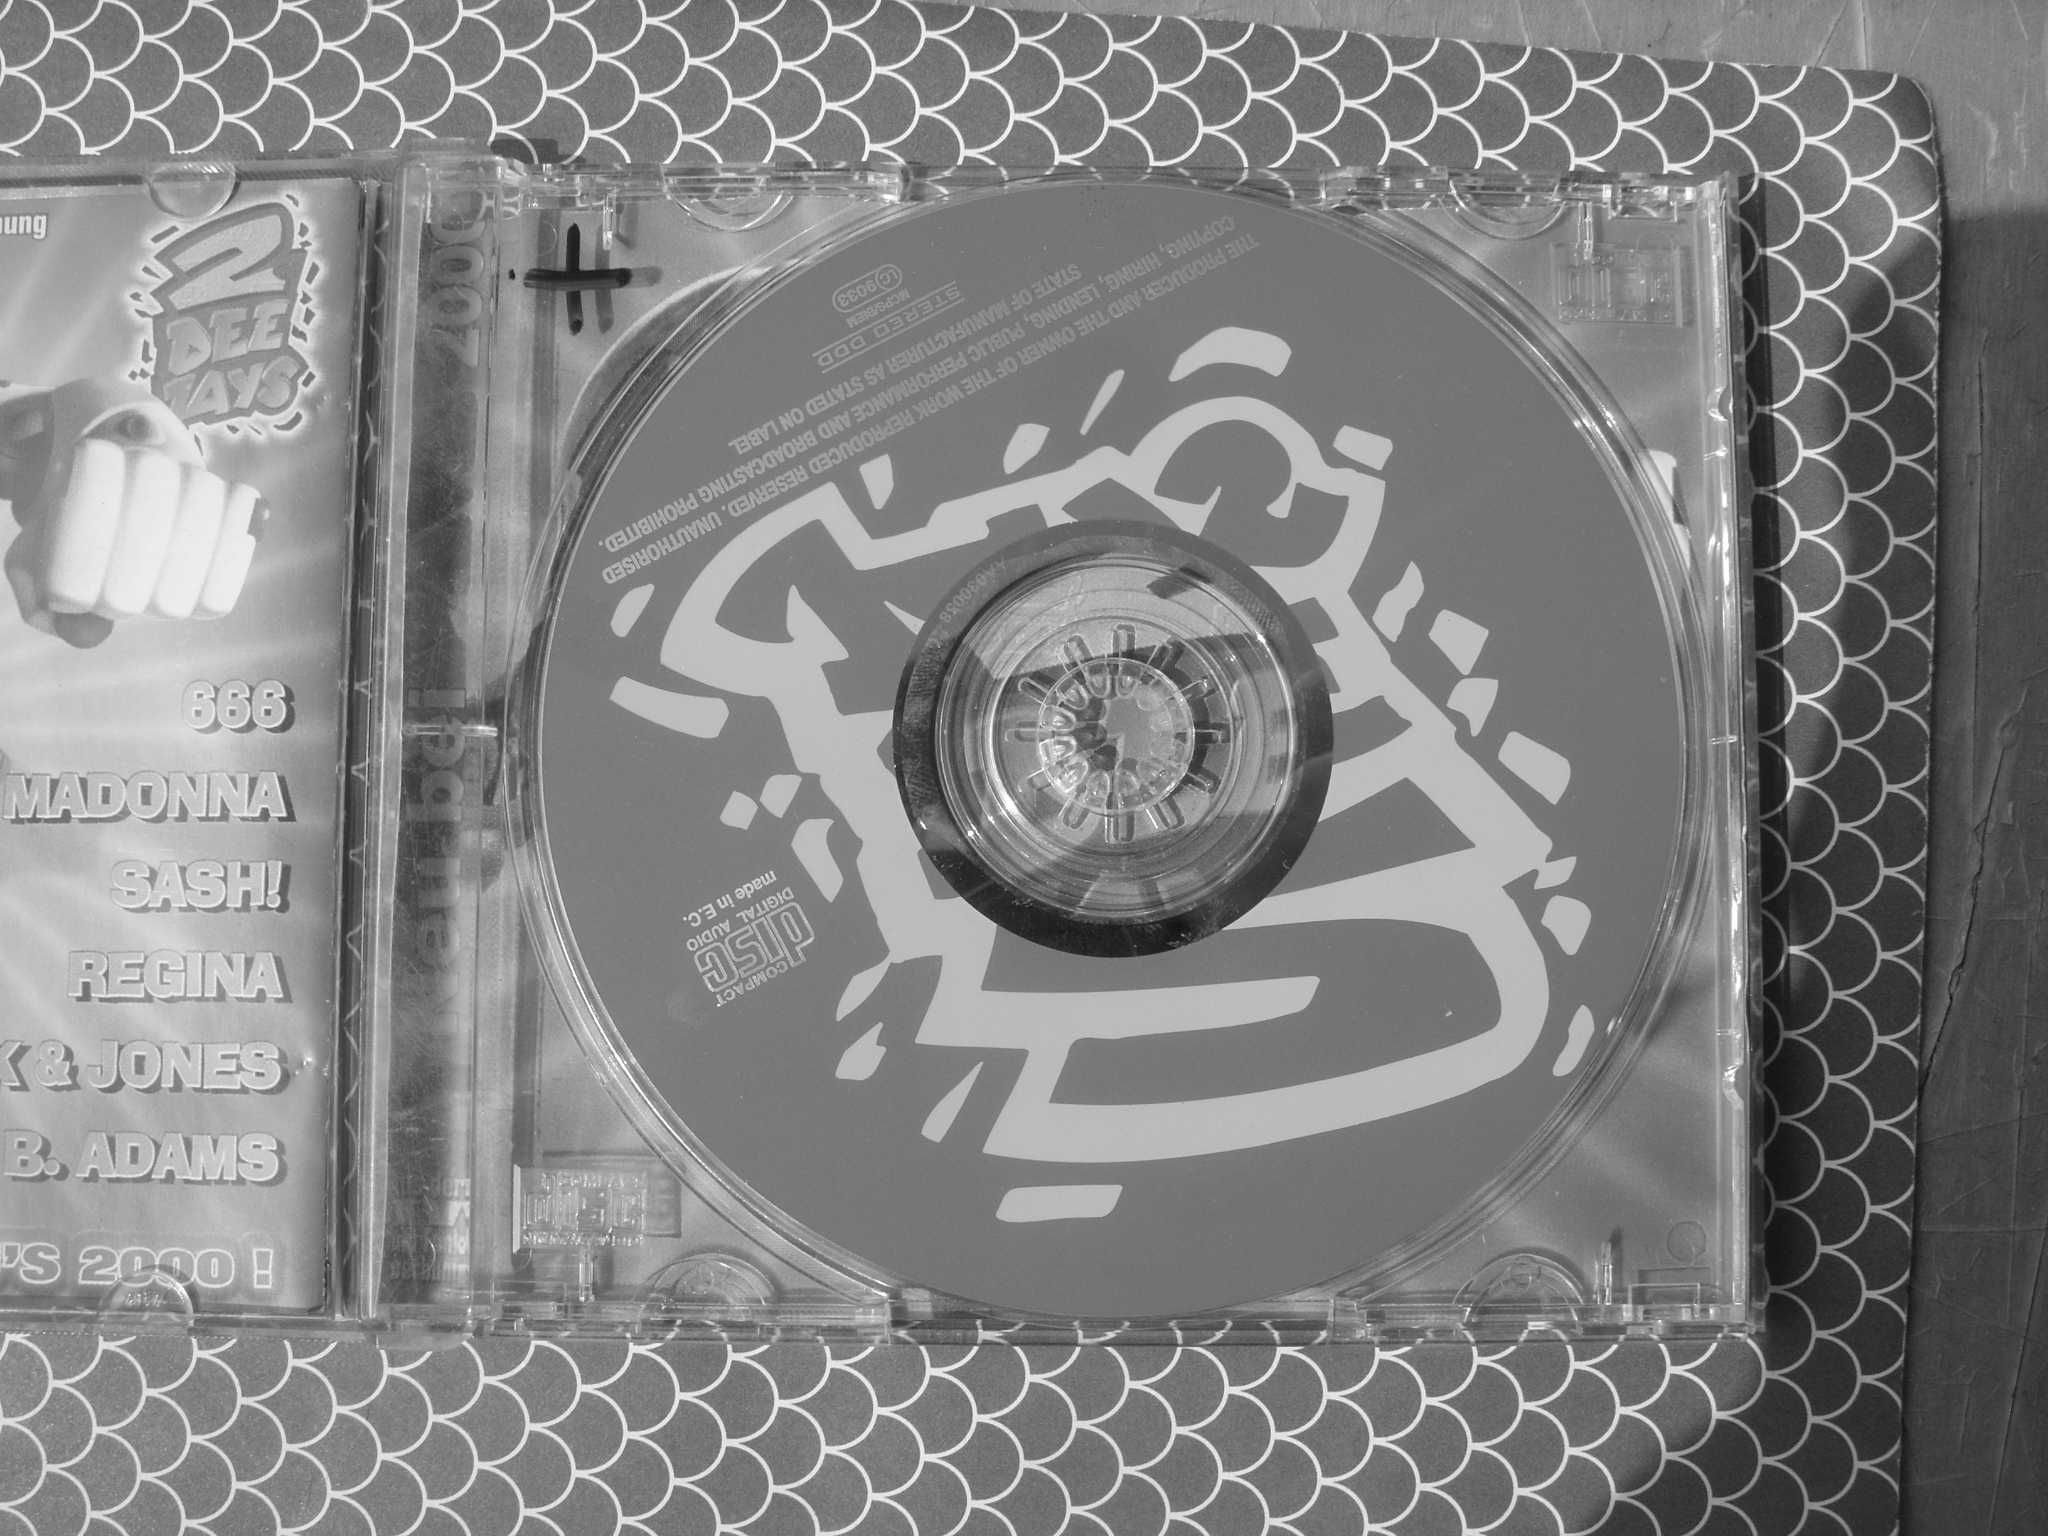 VIVA 2 DEE JAYS--Limited edition, , 2000 rok. --2 CD.